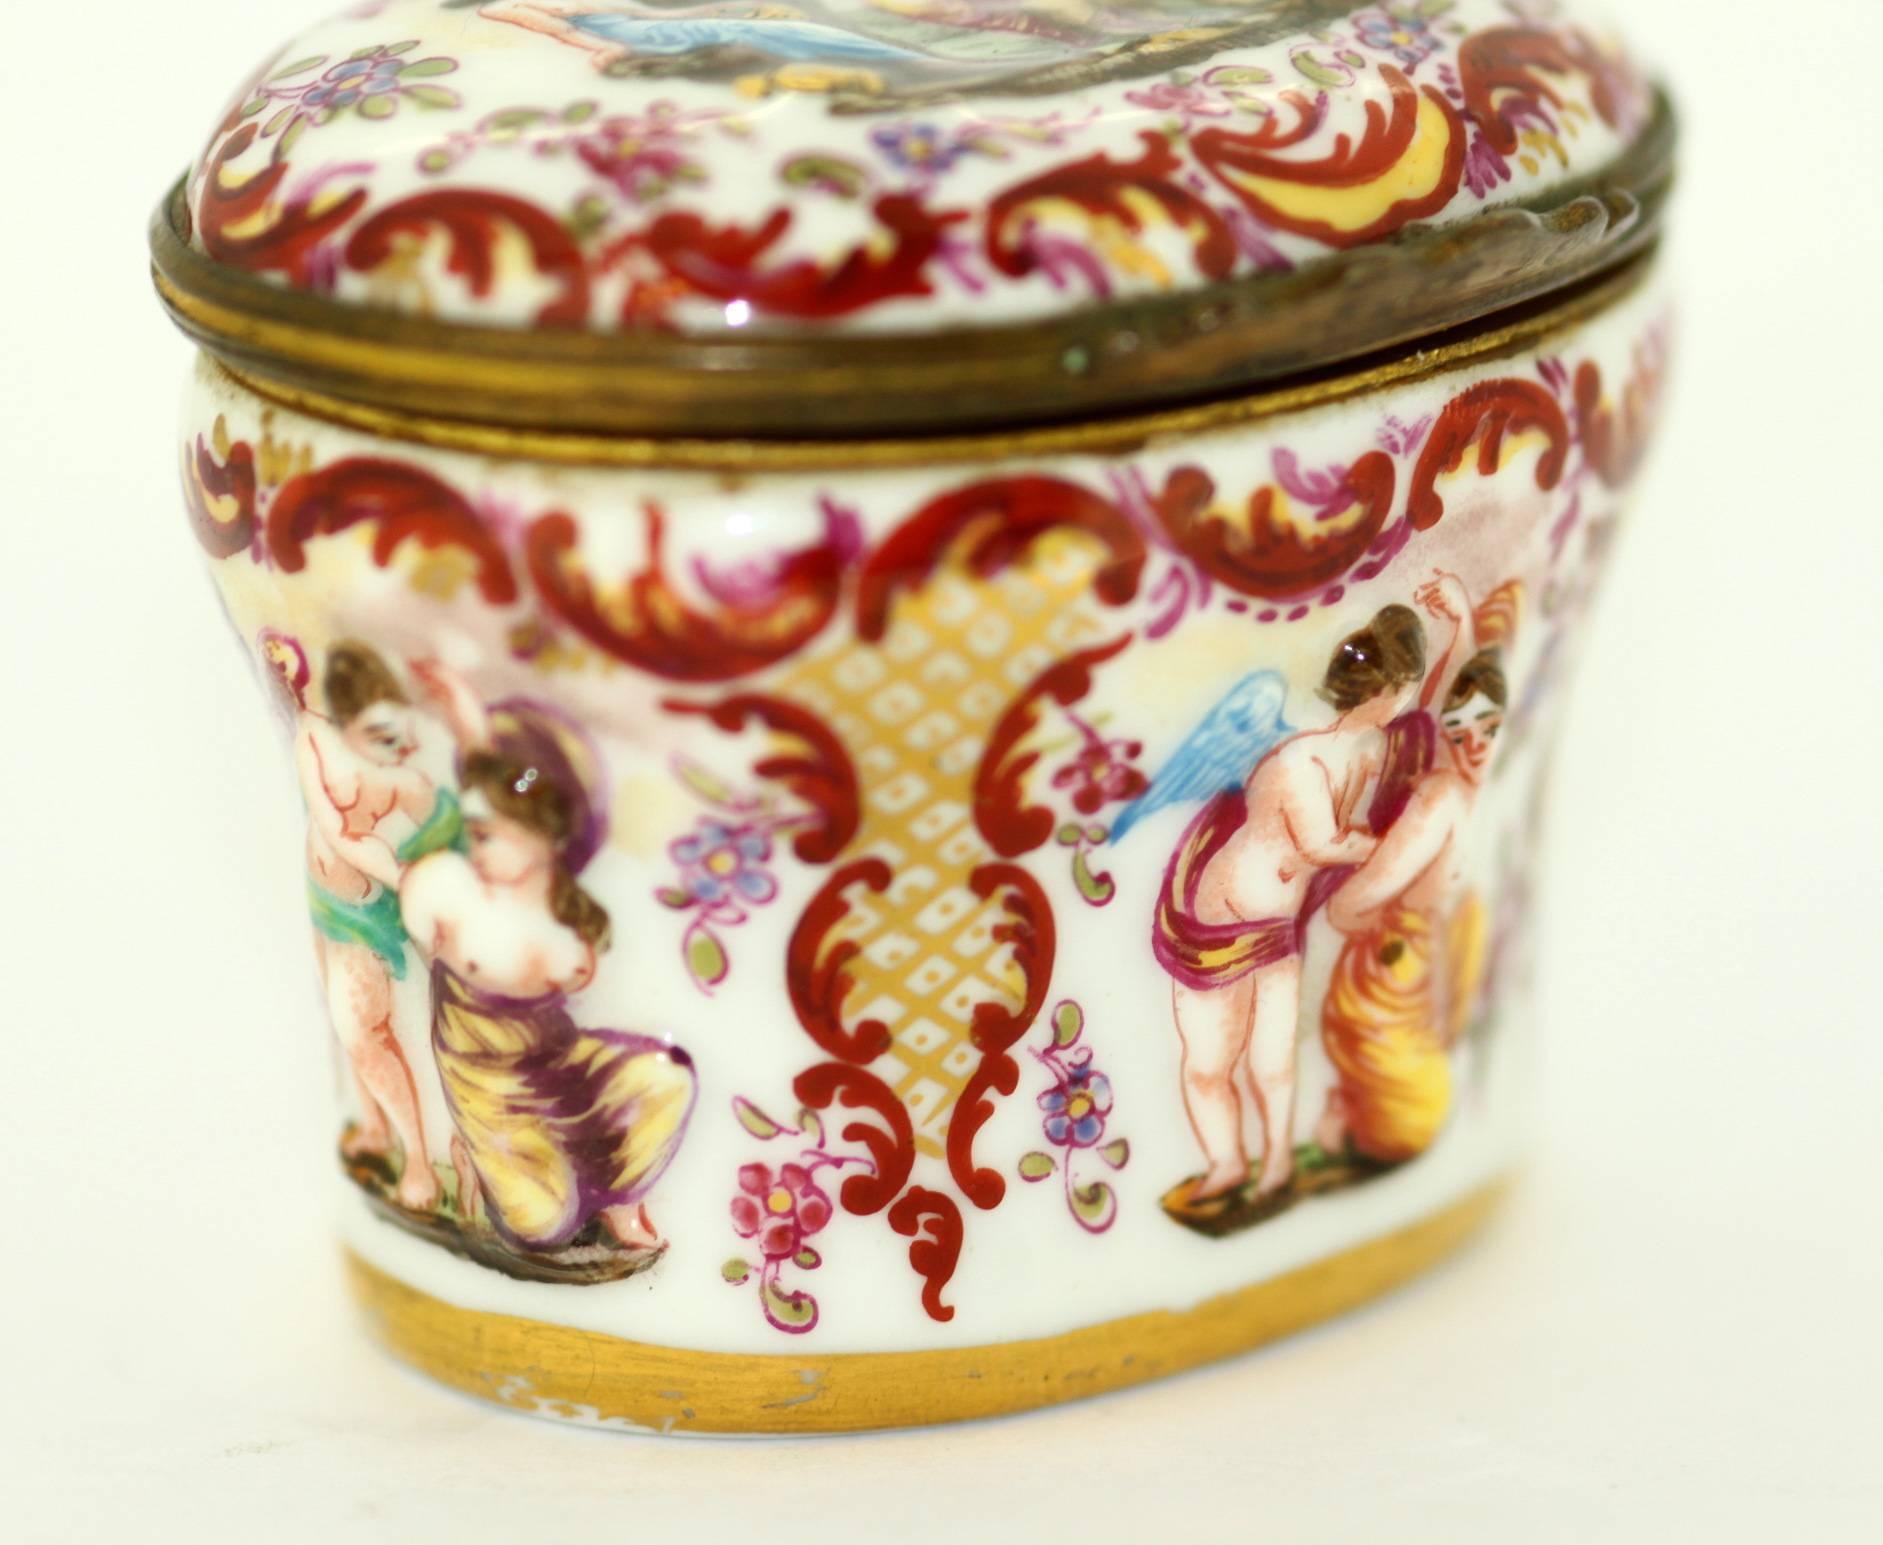 Erotica Porcelain Jar With Lid By Carl Thieme of Potschappel, Germany, c. 1890s. 2